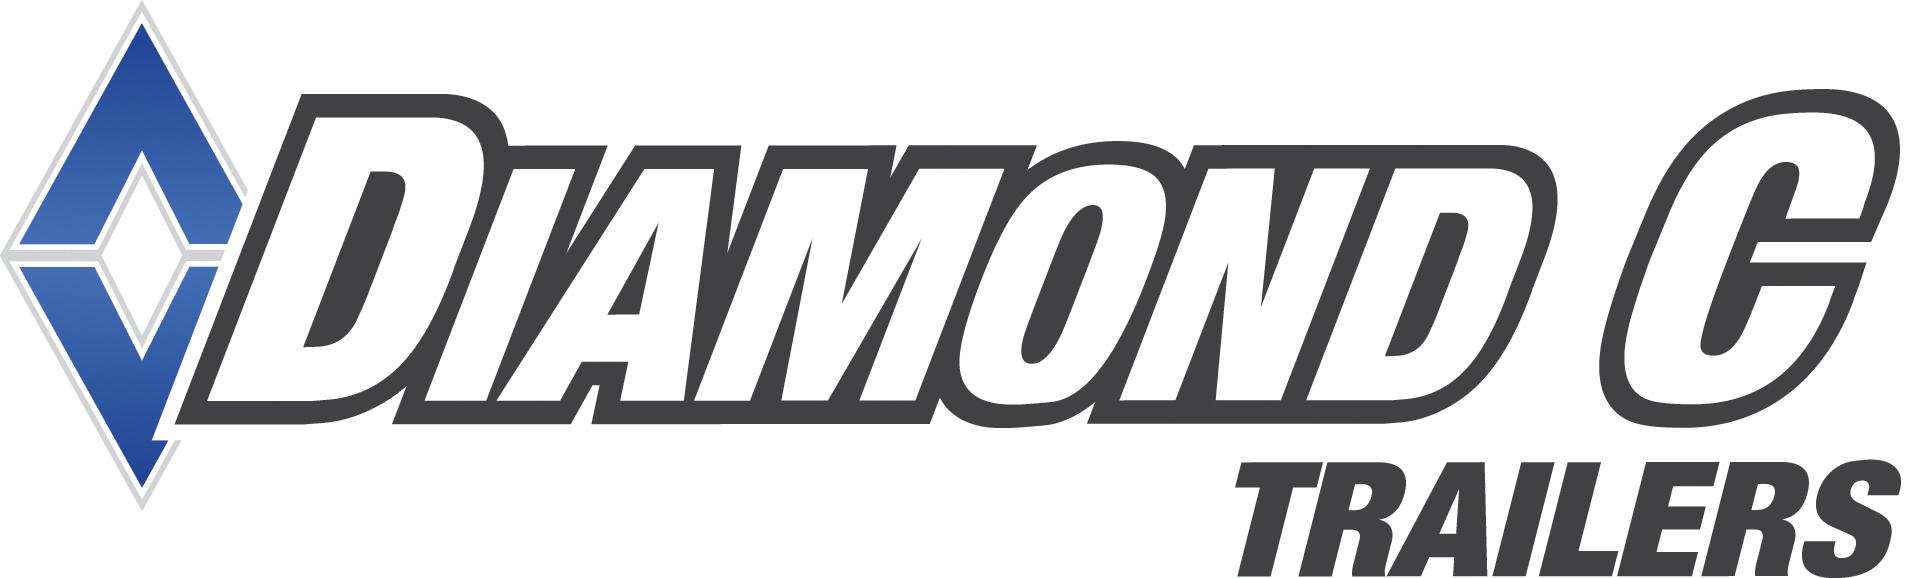 C in Diamond Logo - Logos. Diamond C Trailers